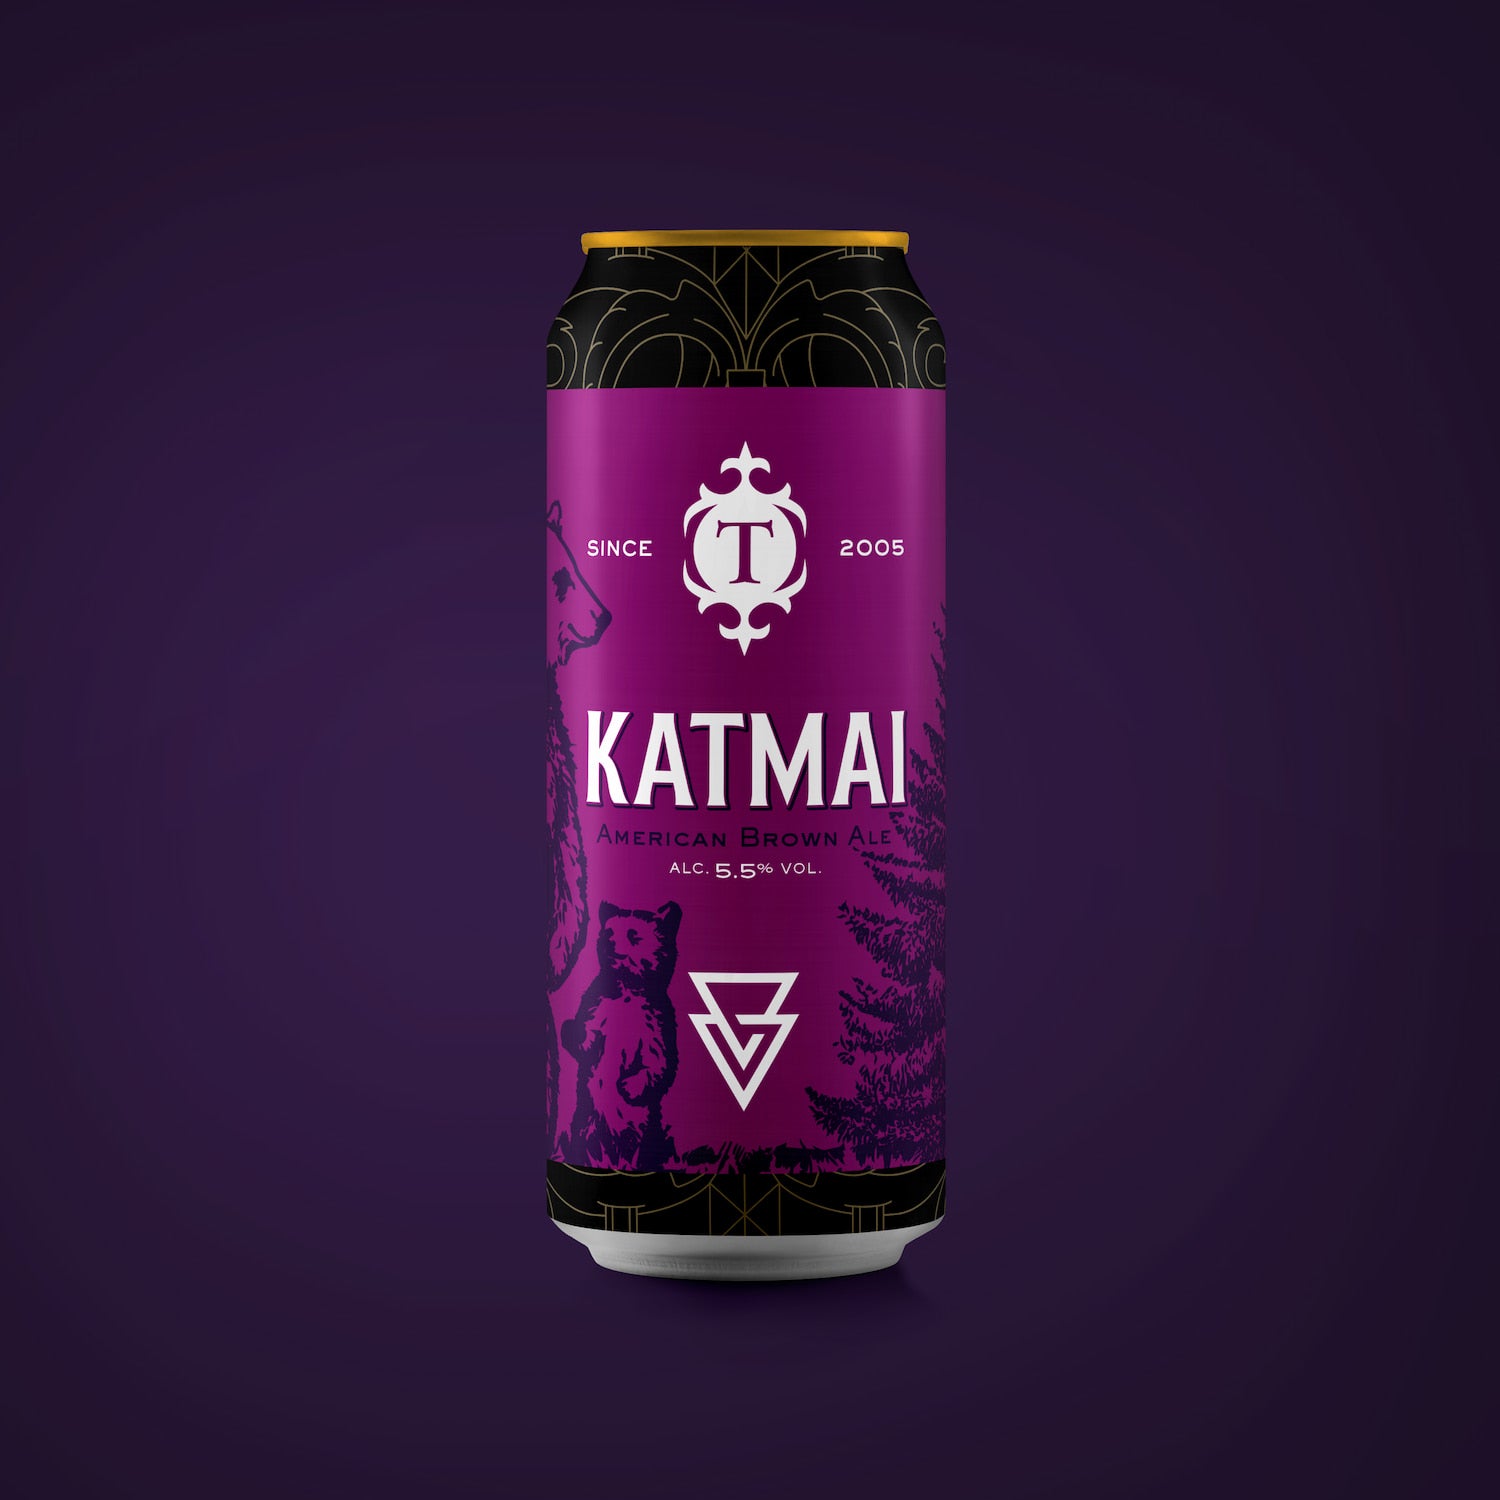 Katmai, American Brown Ale 5.5% Beer - Single Can Thornbridge